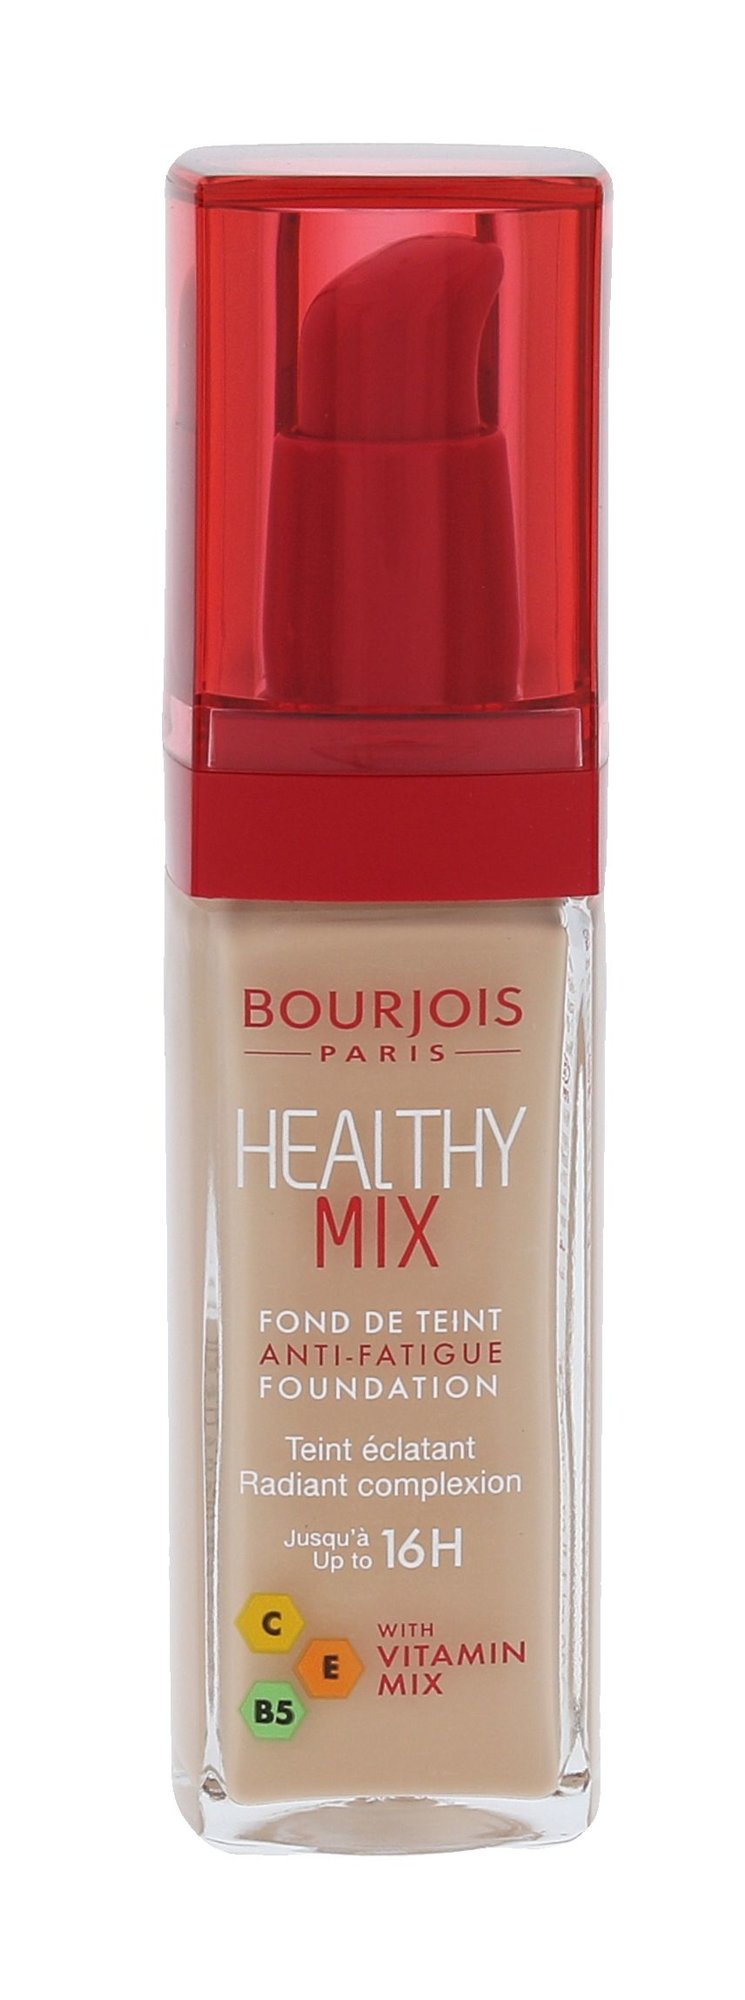 BOURJOIS Paris Healthy Mix Anti-Fatigue Foundation